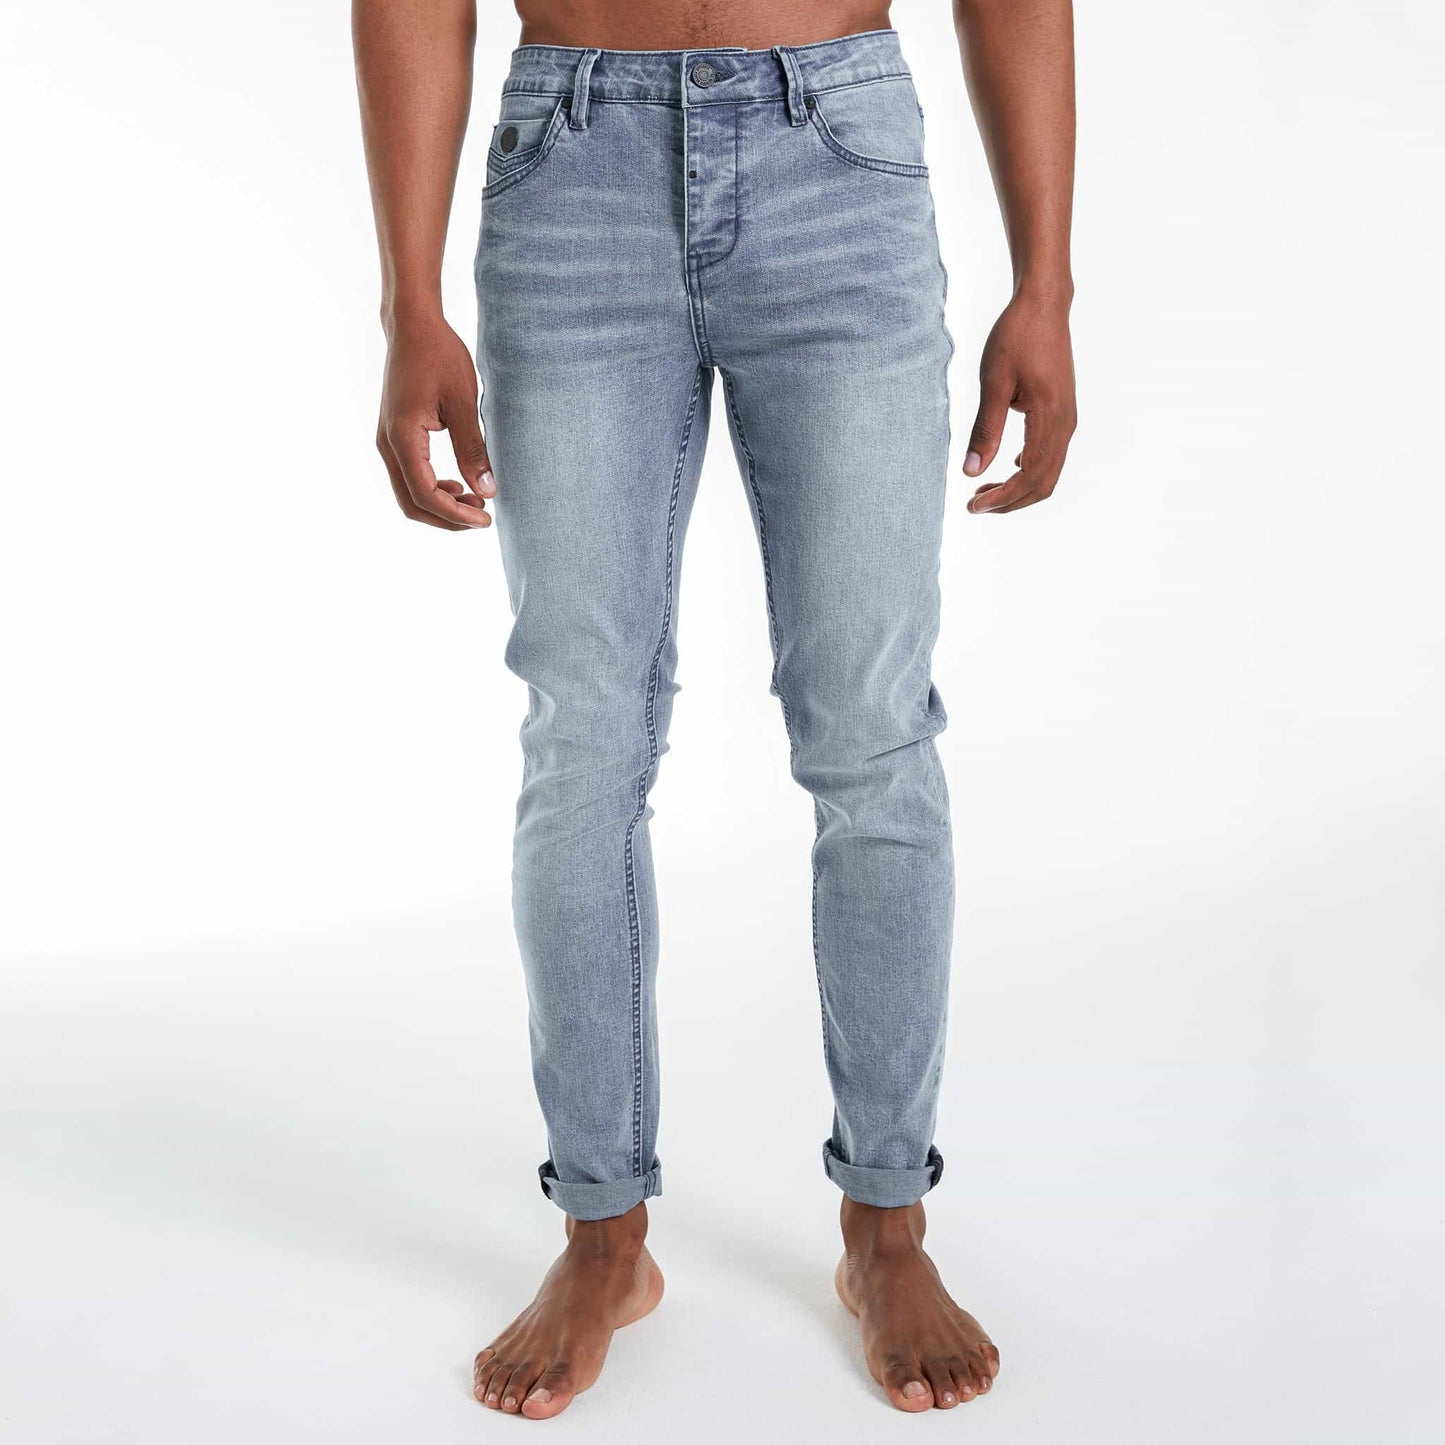 Tarmac Jeans  - Grey